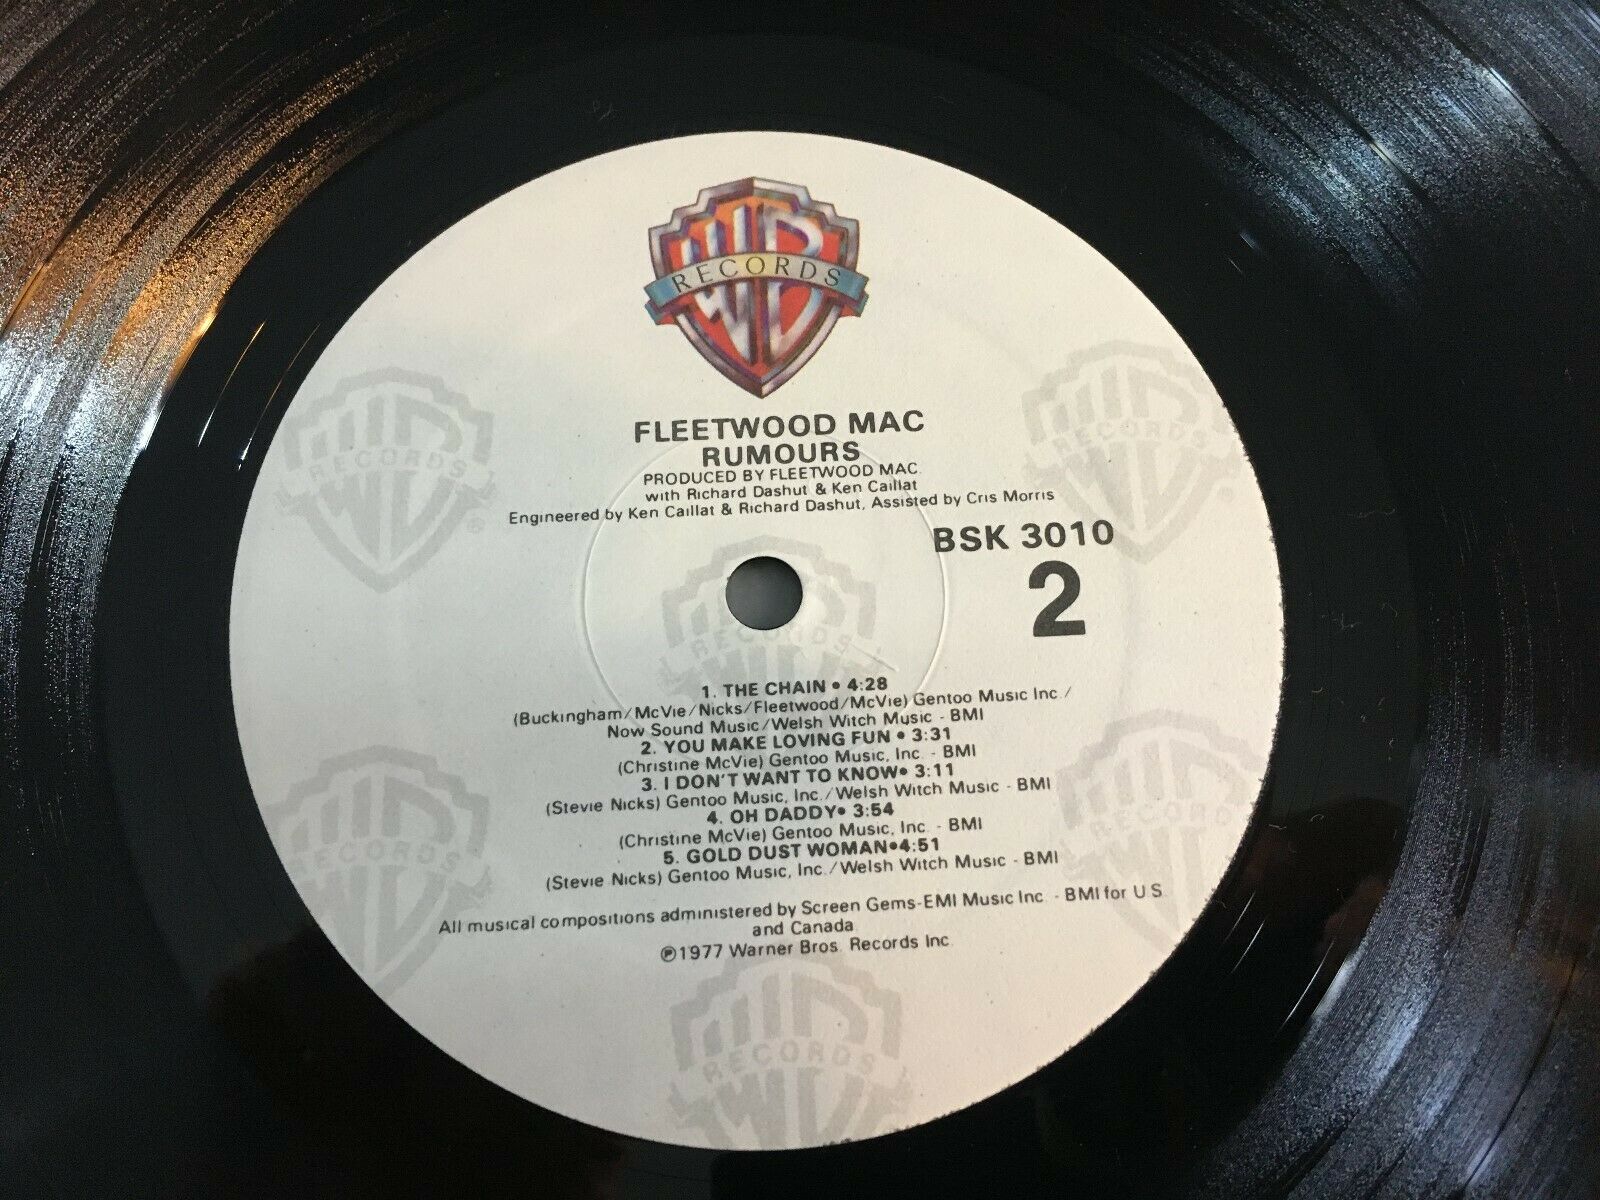 Fleetwood Mac – Fleetwood Mac limited edition white vinyl UK LP